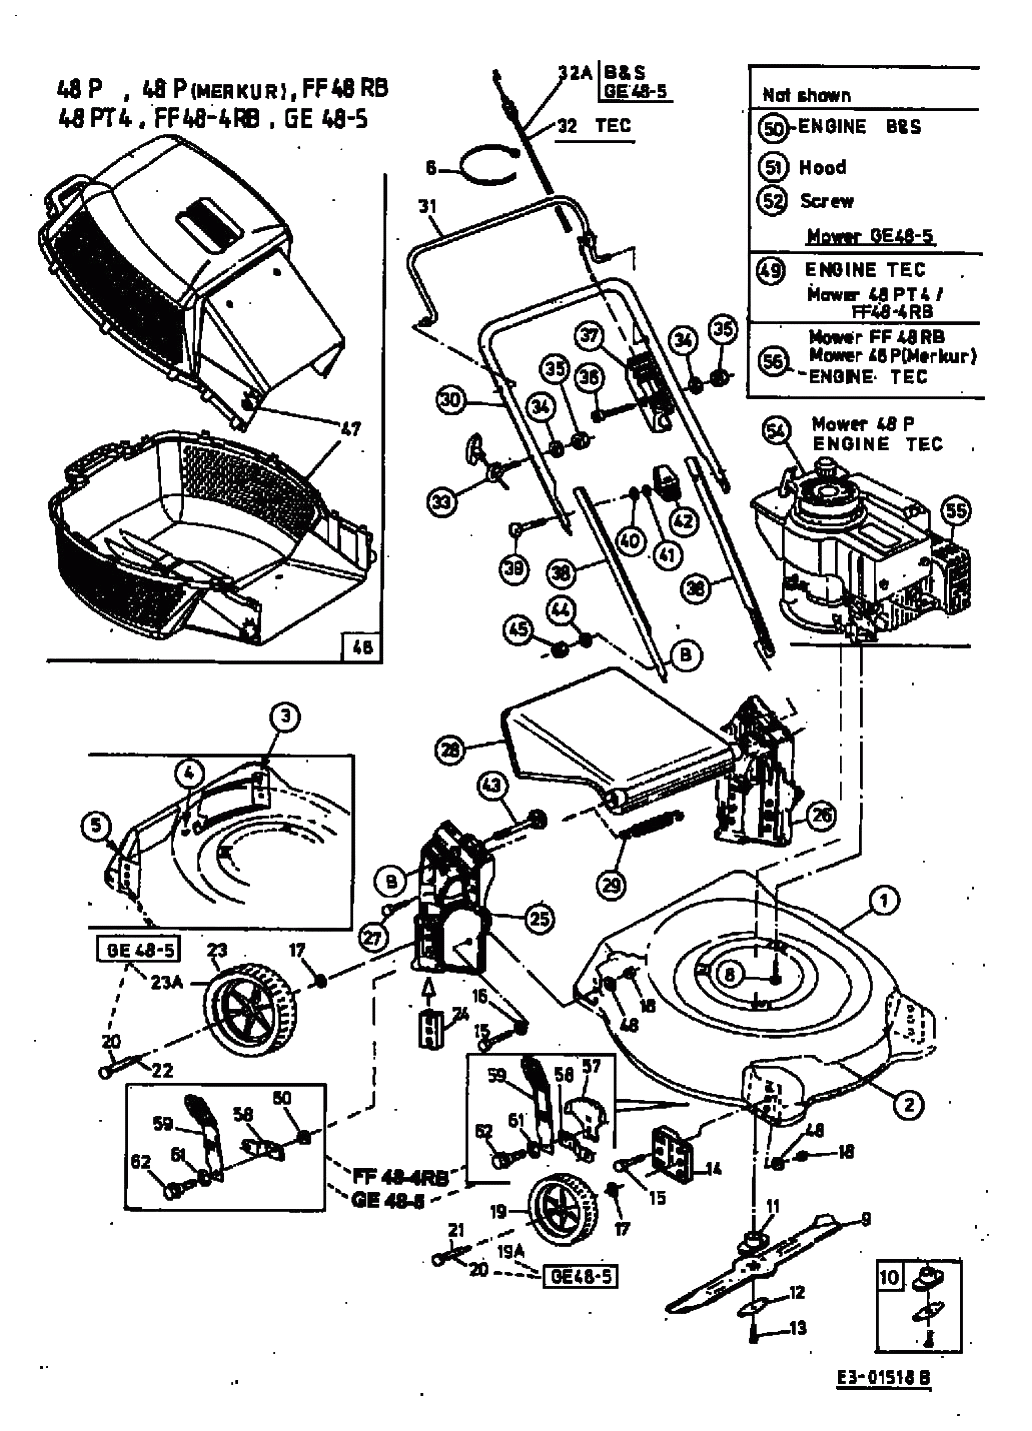 MTD Артикул 11A-V01A600 (год выпуска 2002). Основная деталировка